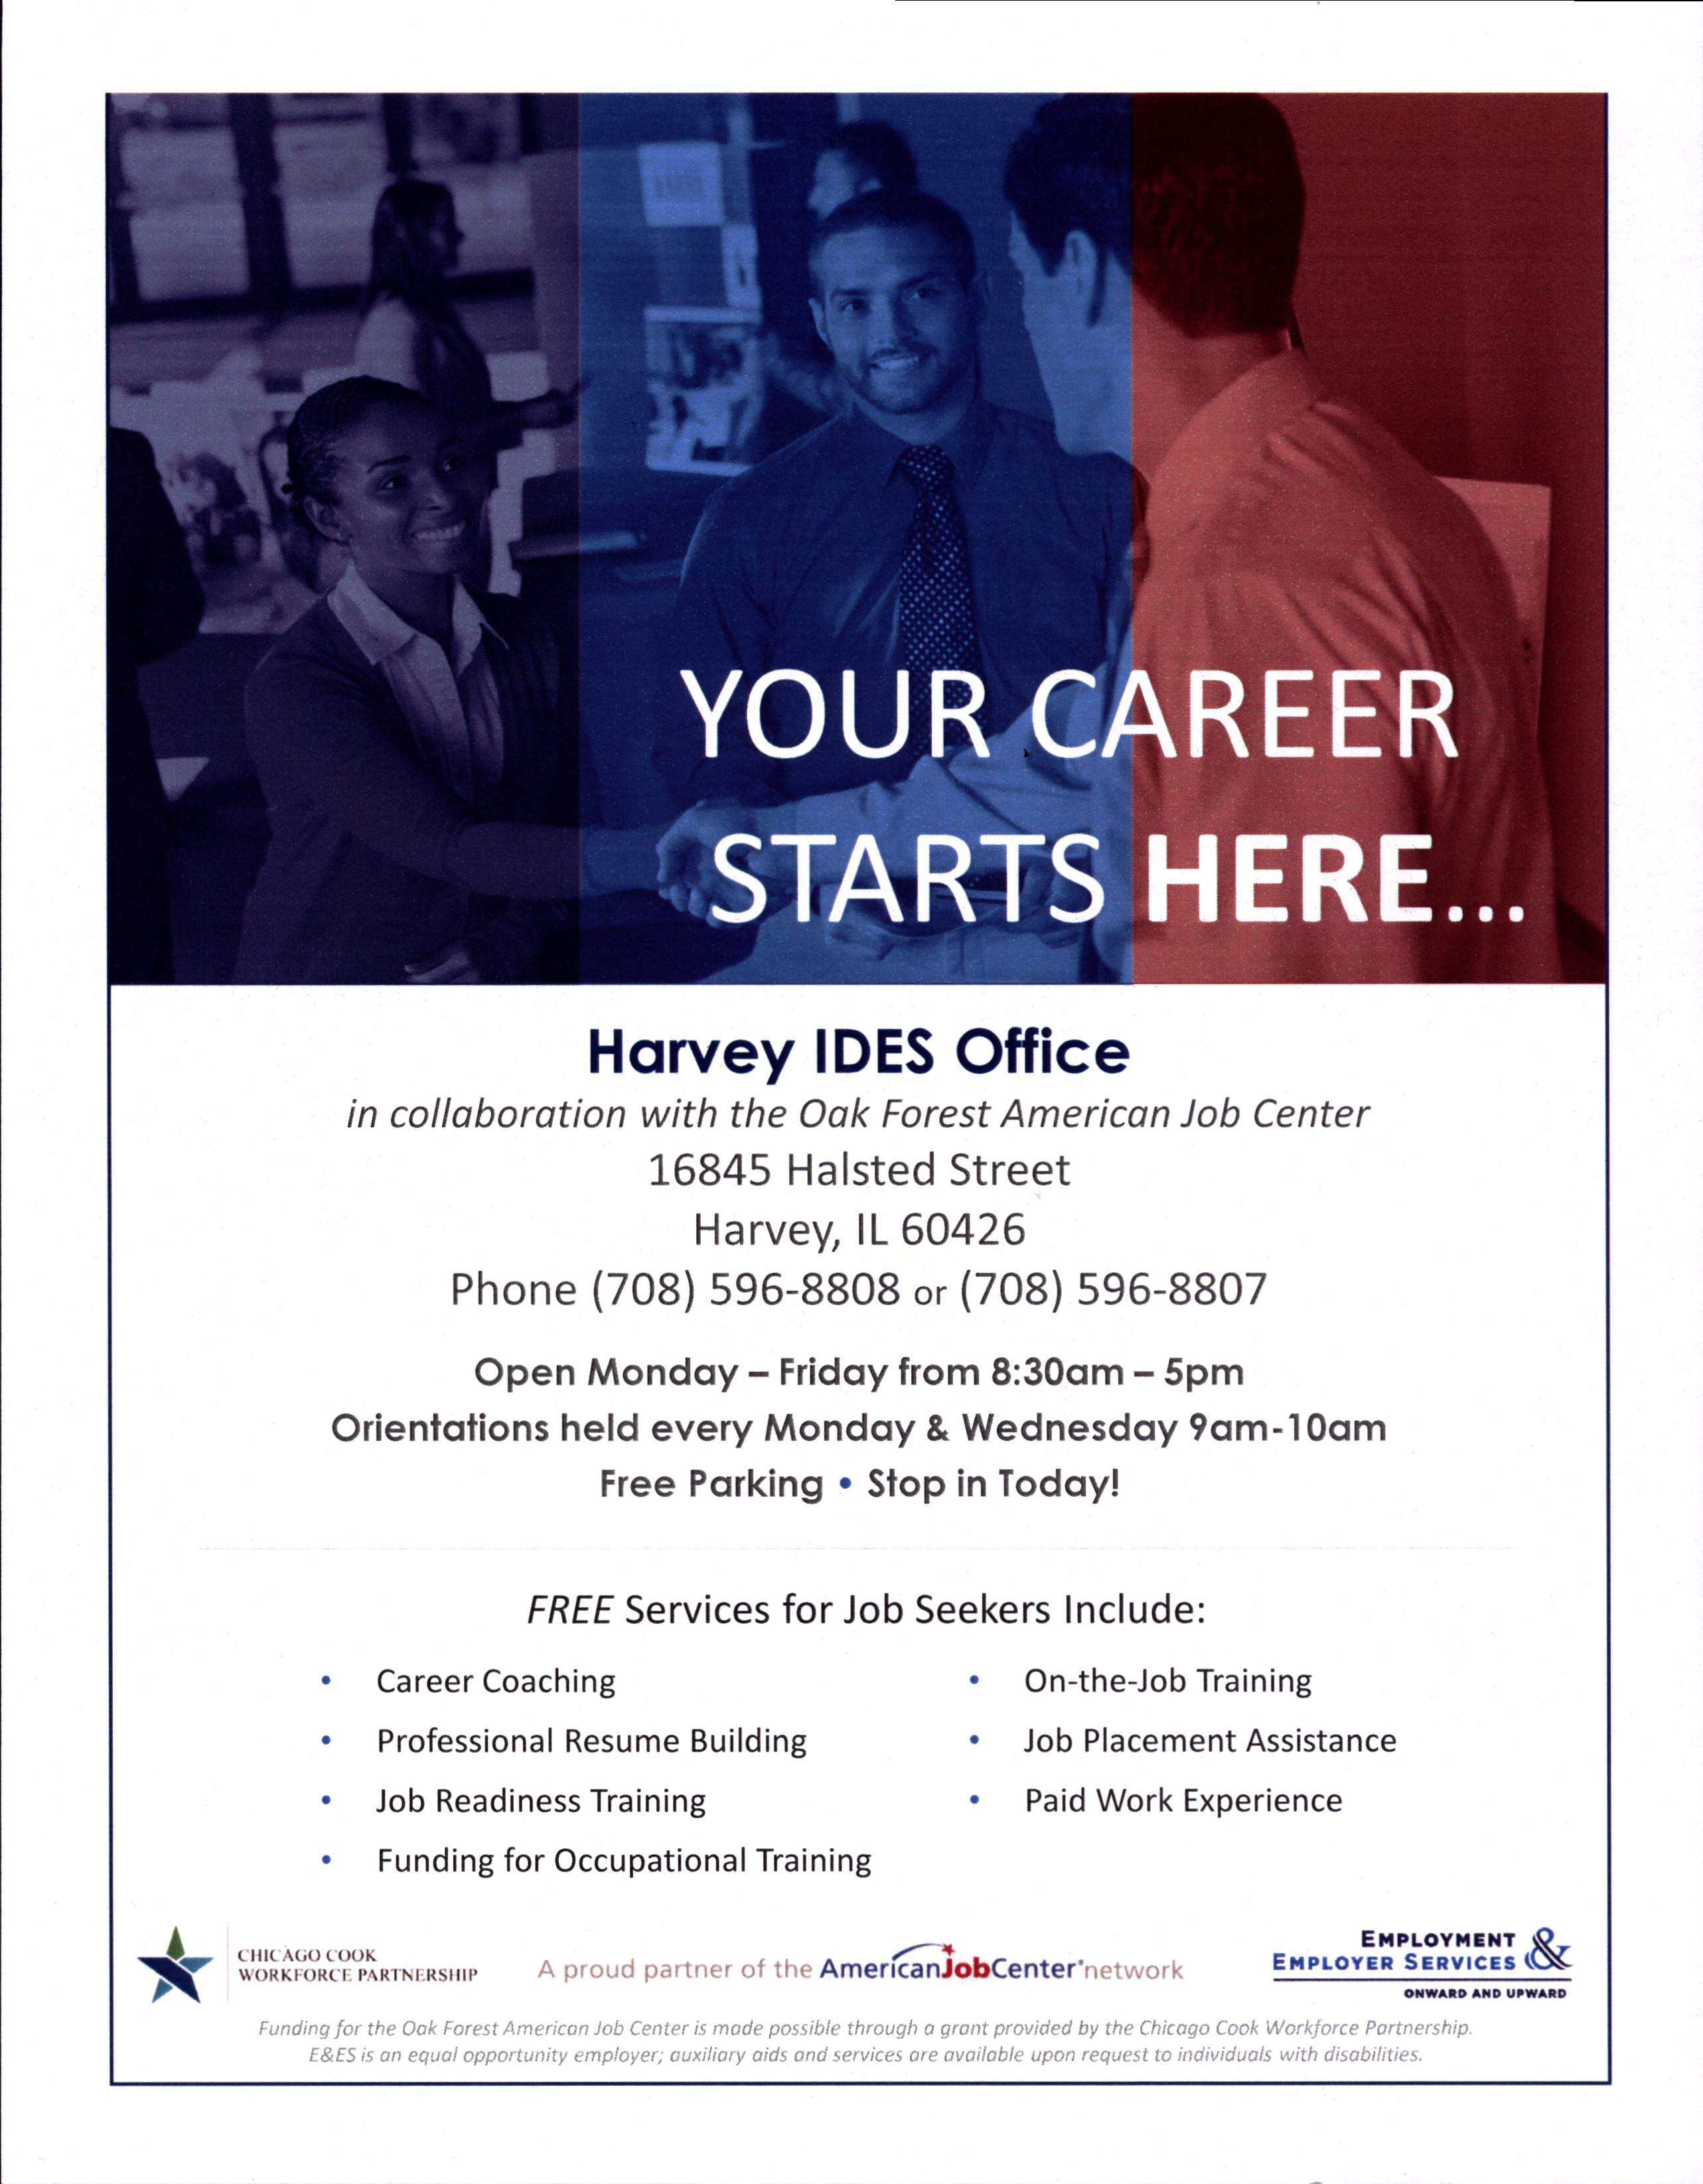 Harvey IDES Office flyer